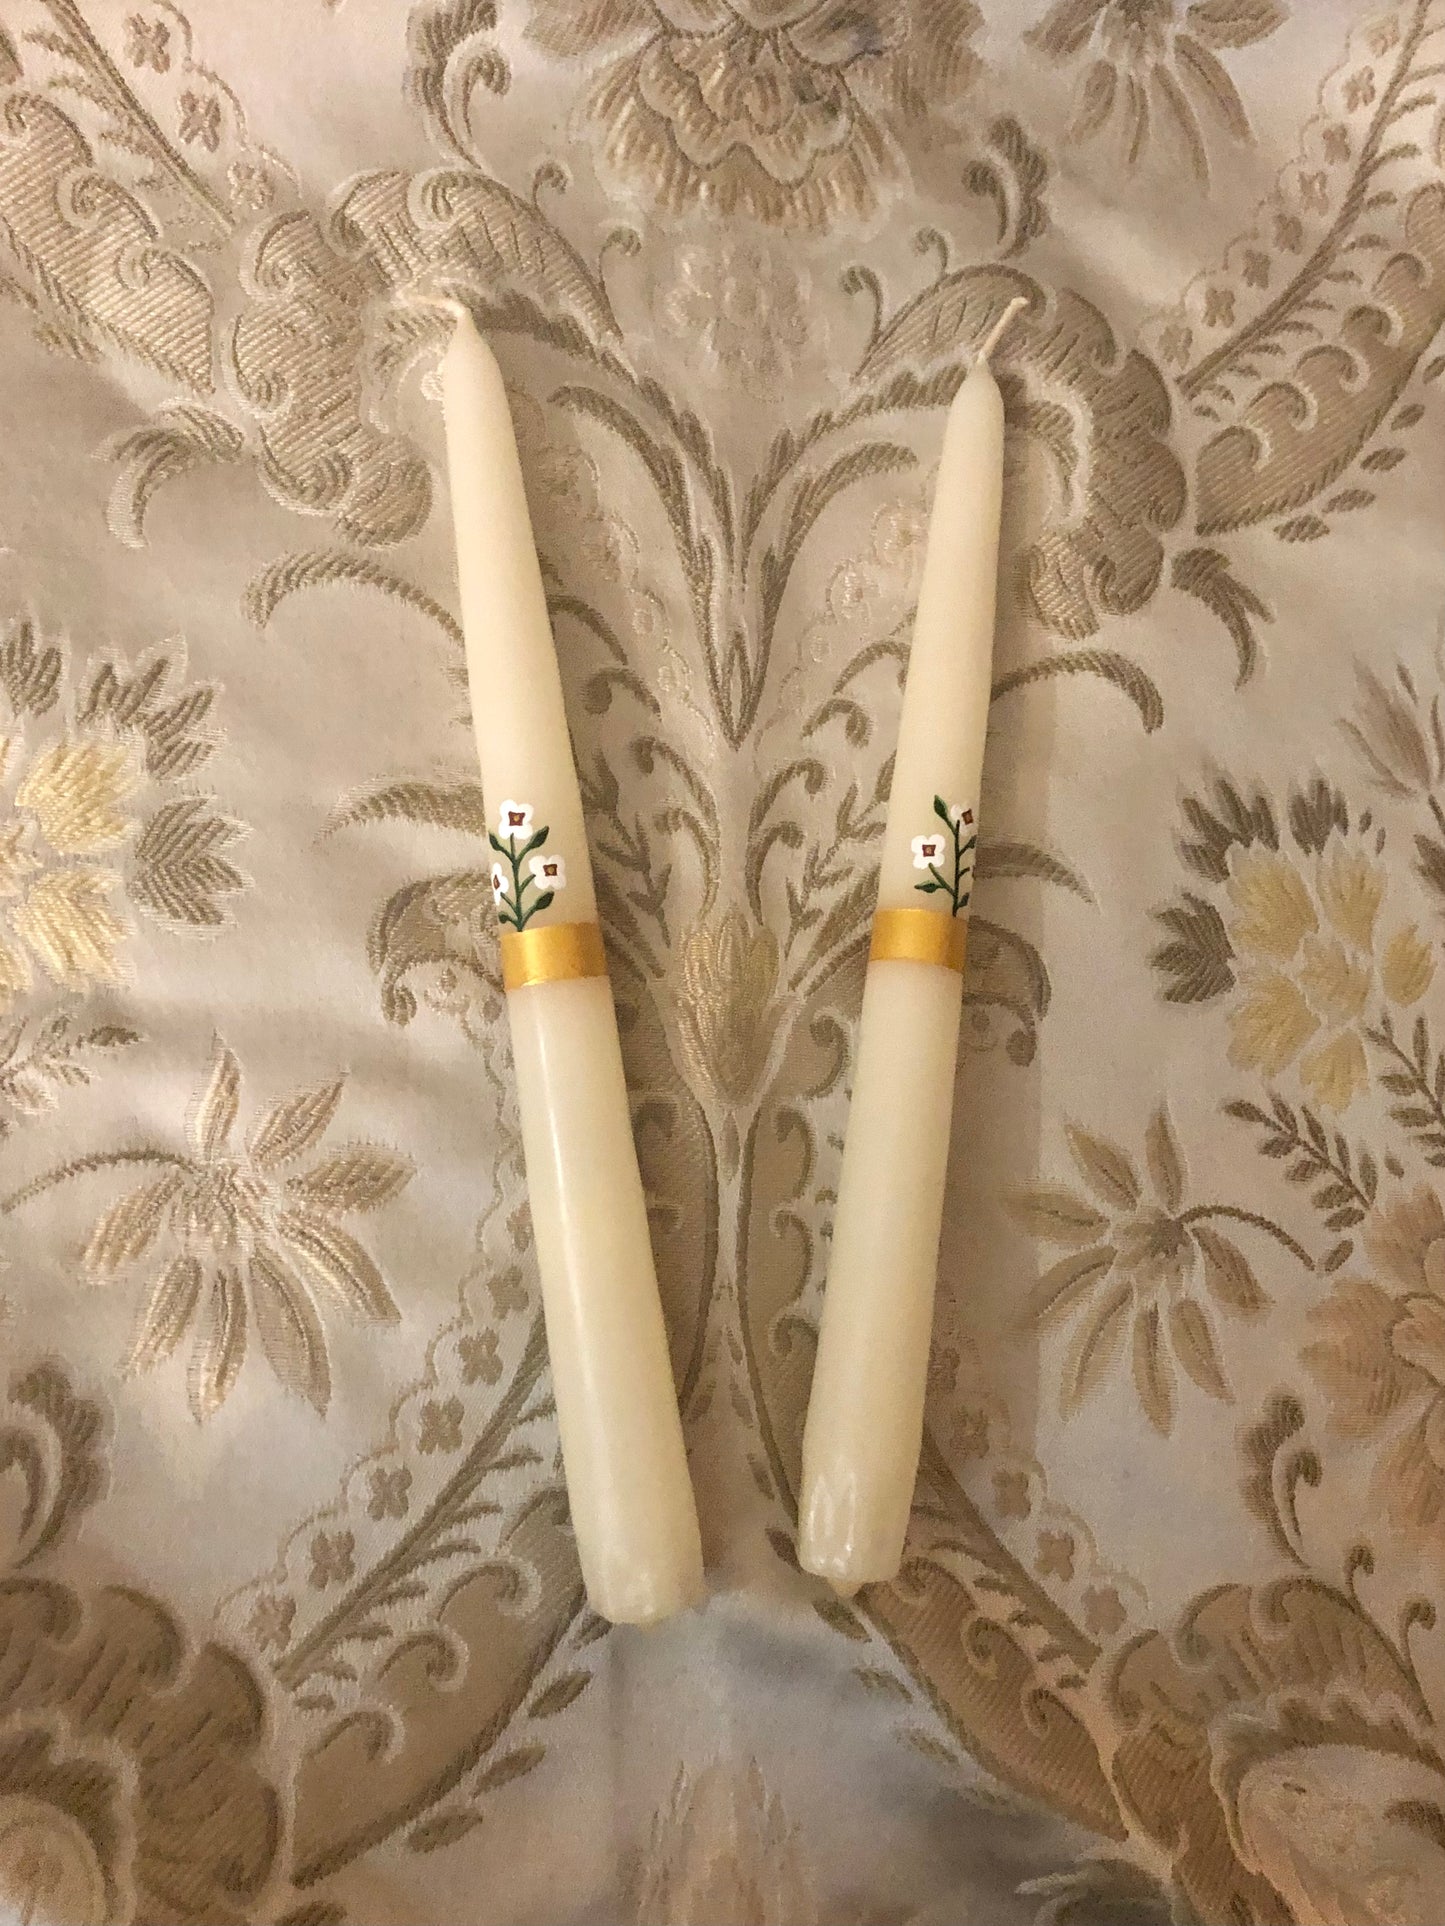 The Unity Candle Set